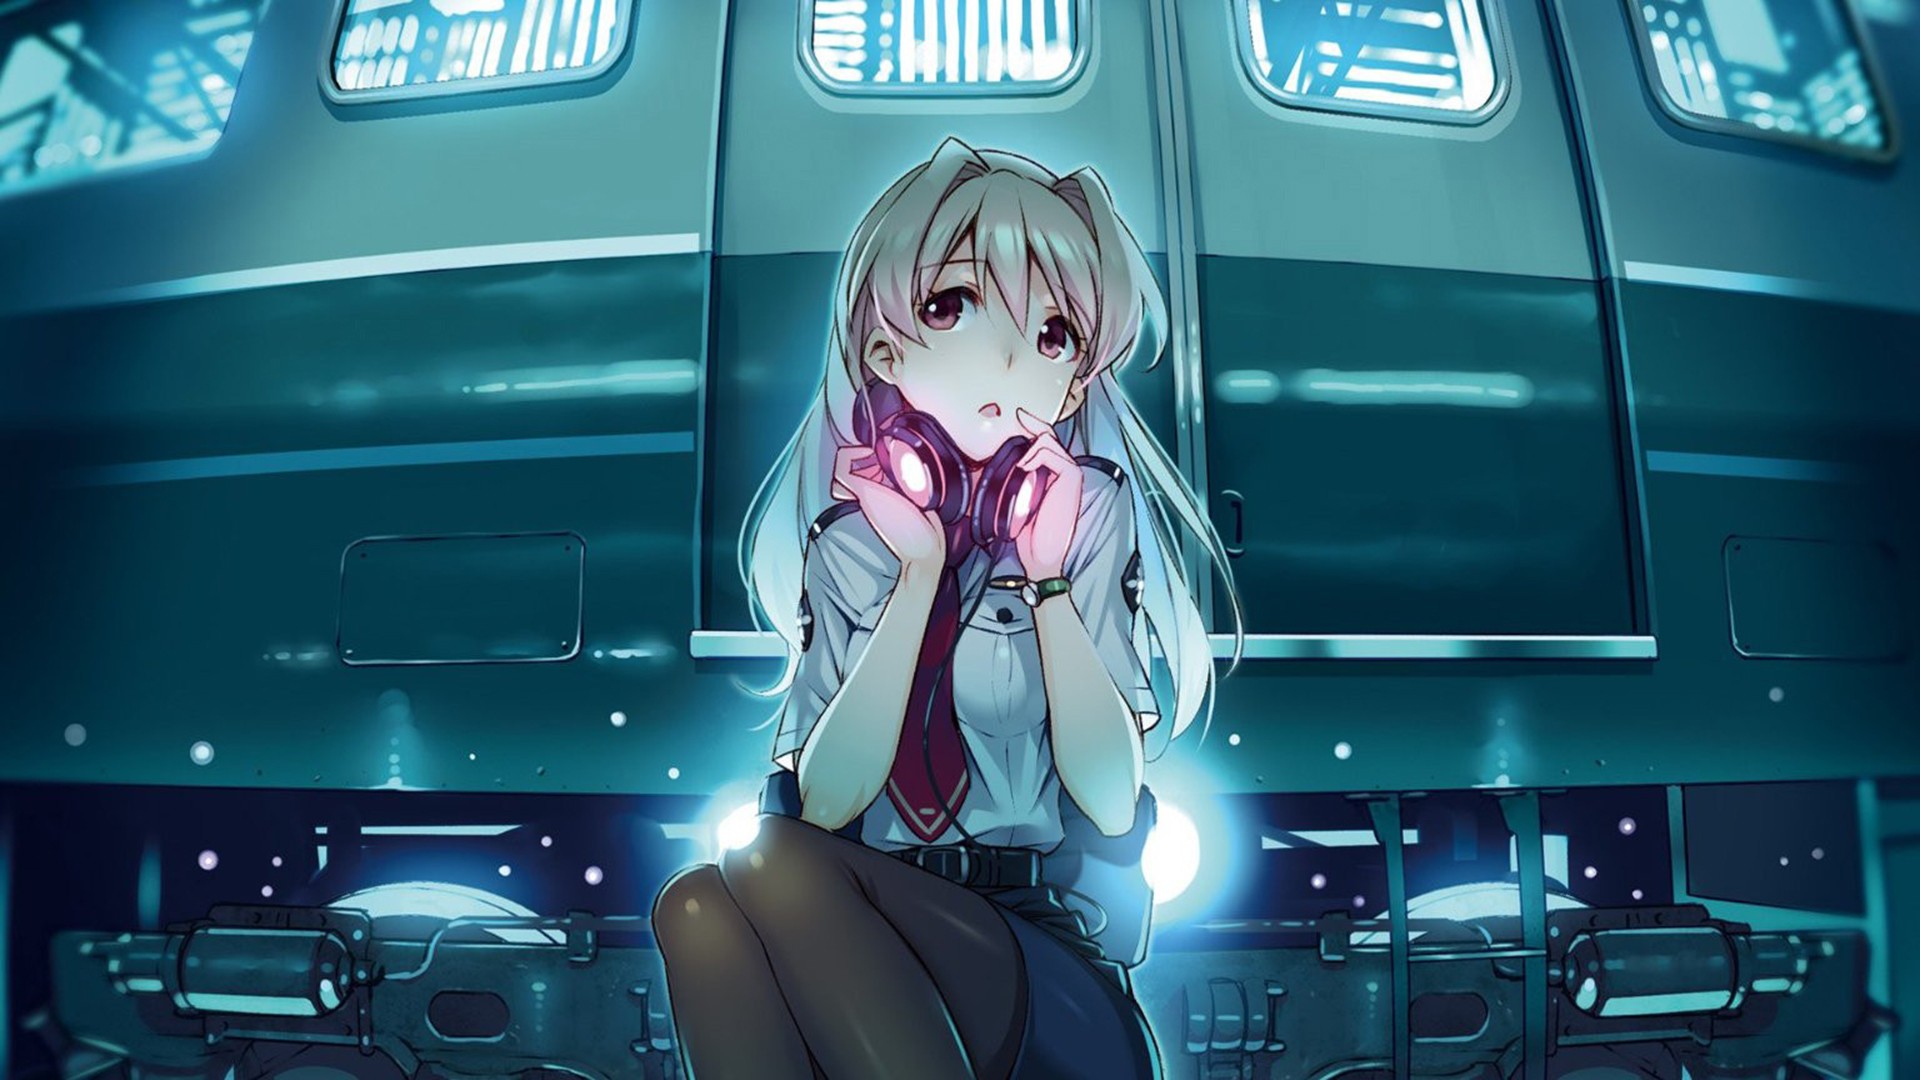 Anime 1920x1080 Rail Wars Koumi Haruka anime girls anime headphones knees together train vehicle long hair sitting cyan